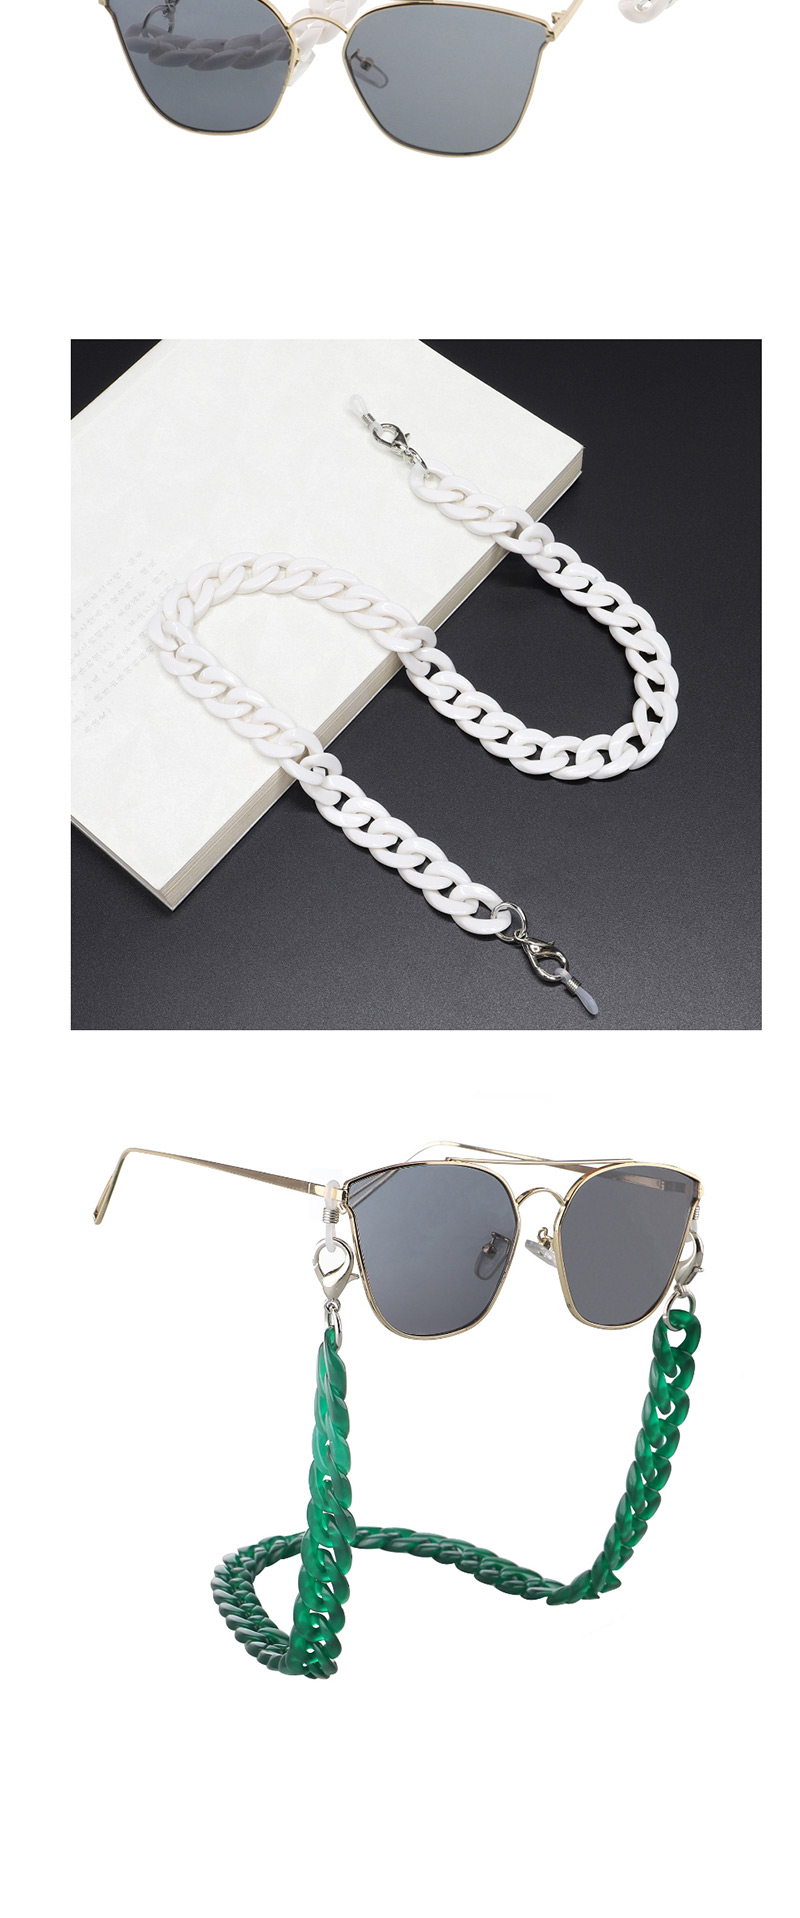 Fashion Black And White Acrylic Glasses Chain,Sunglasses Chain